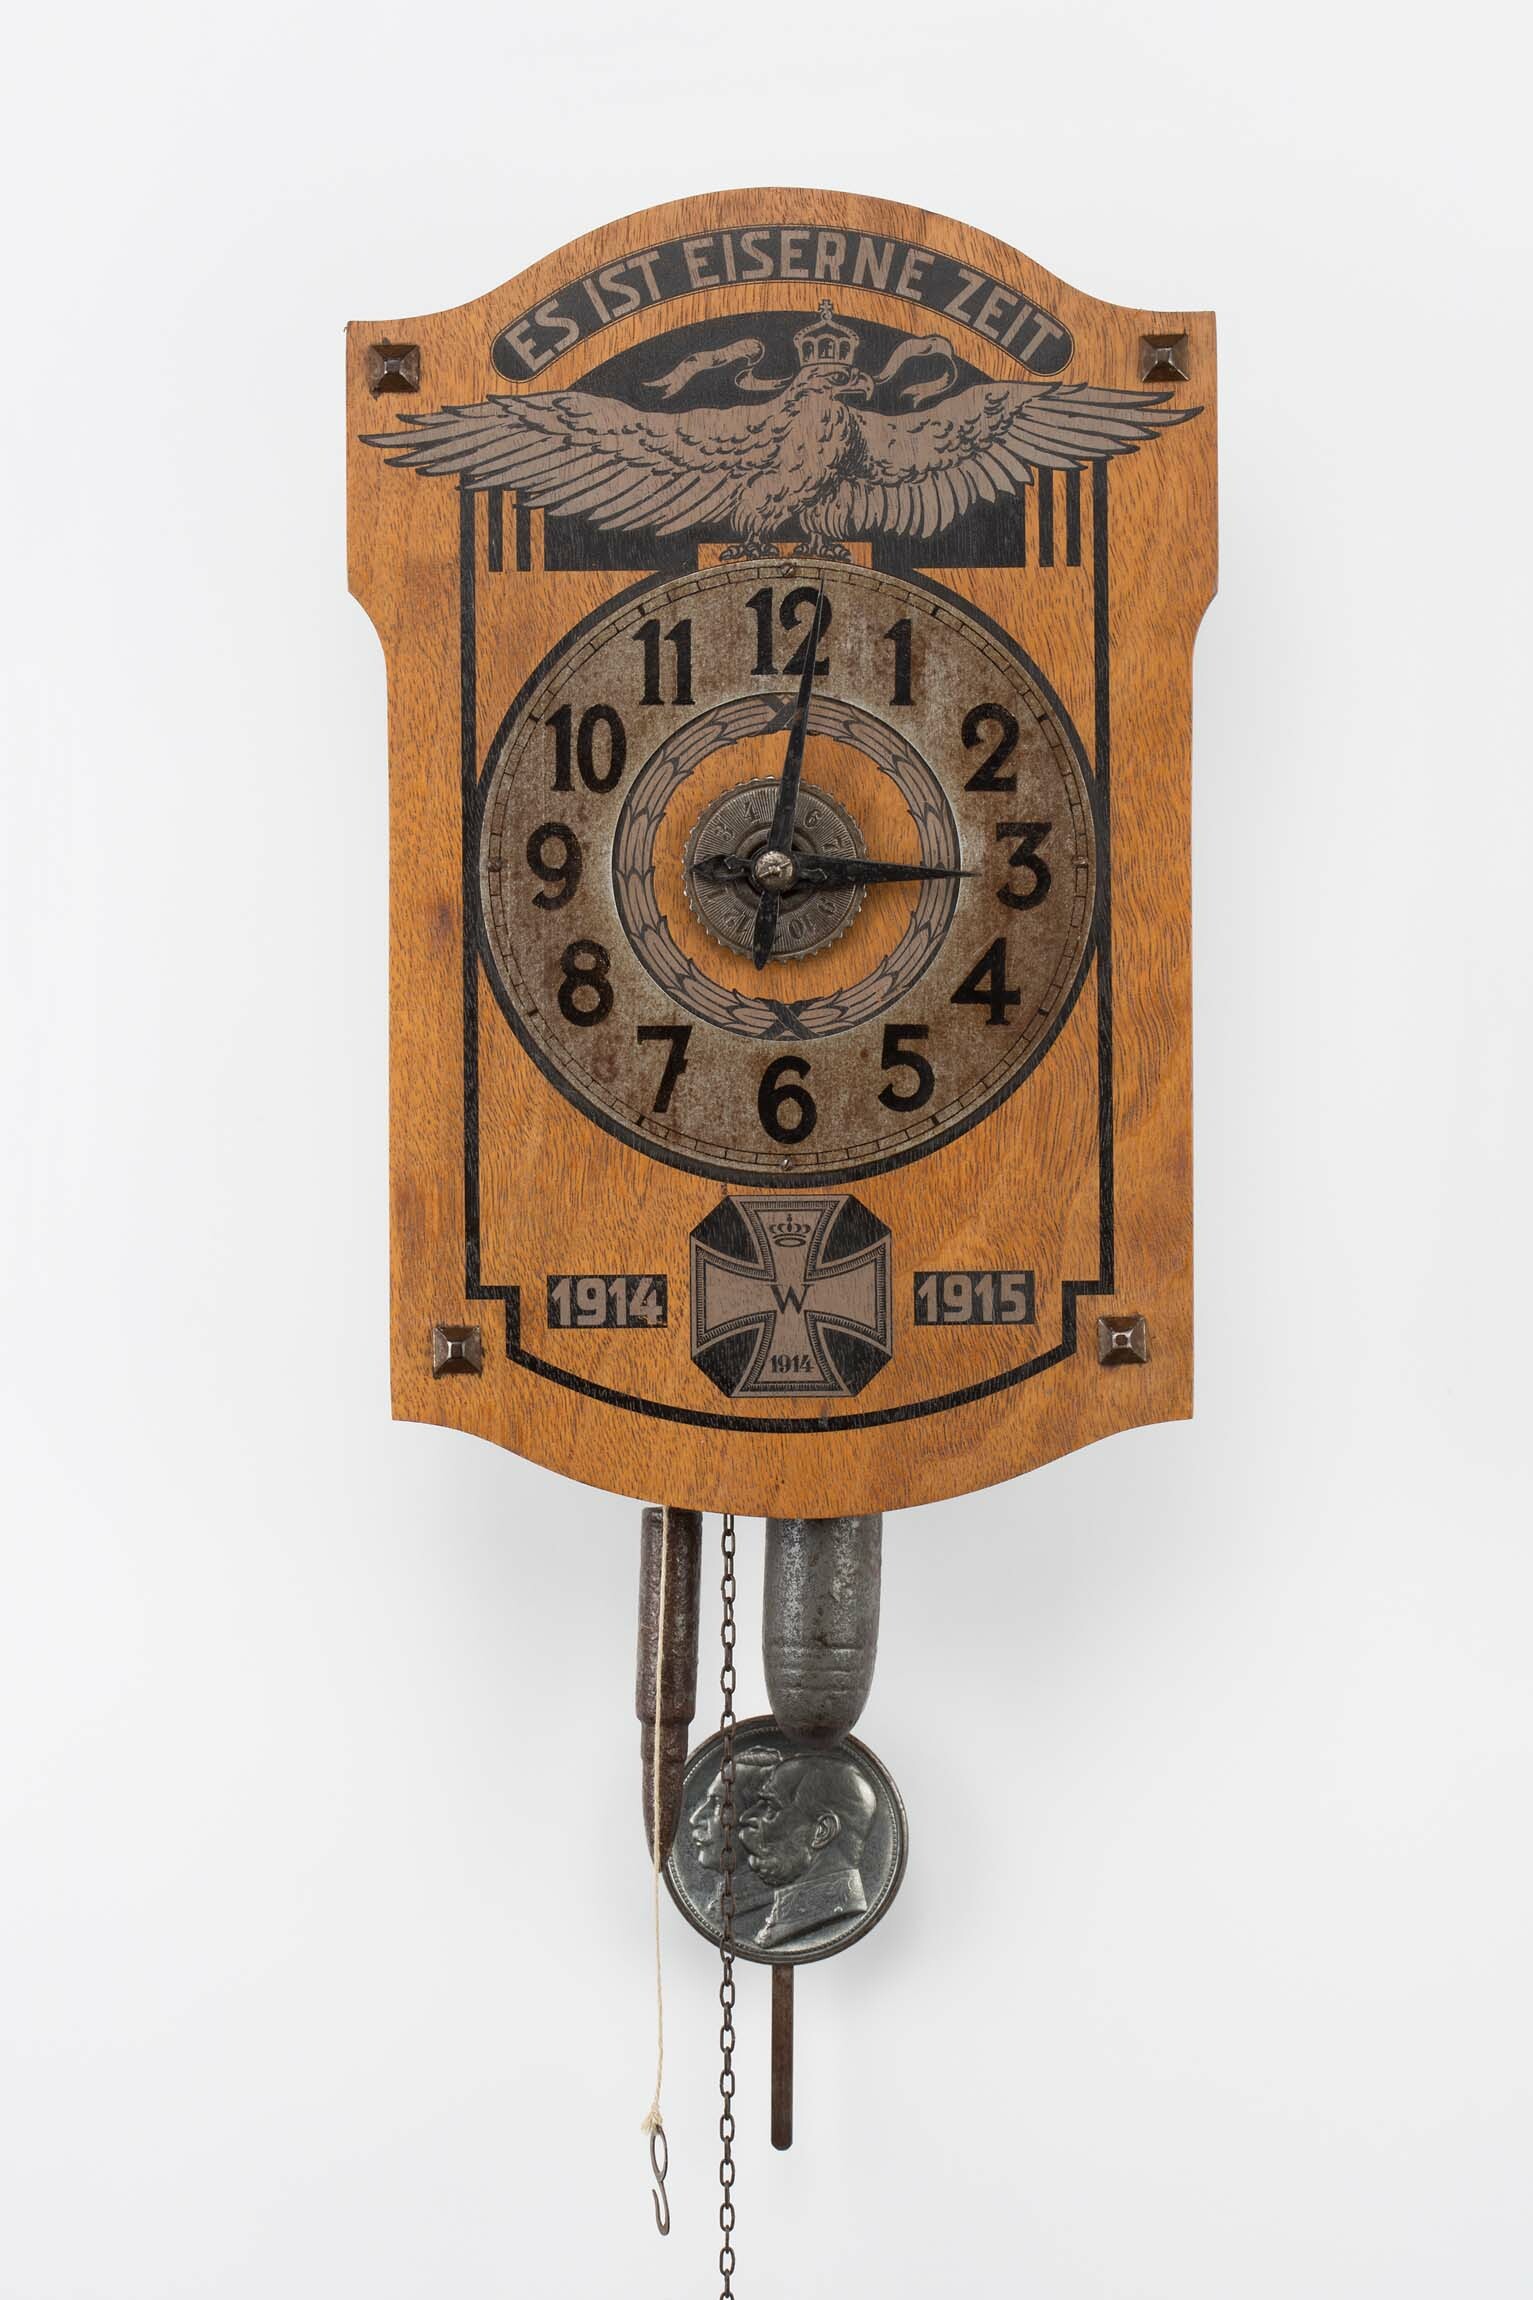 Wanduhr Es ist Eiserne Zeit, Schwarzwald, um 1915 (Deutsches Uhrenmuseum CC BY-SA)